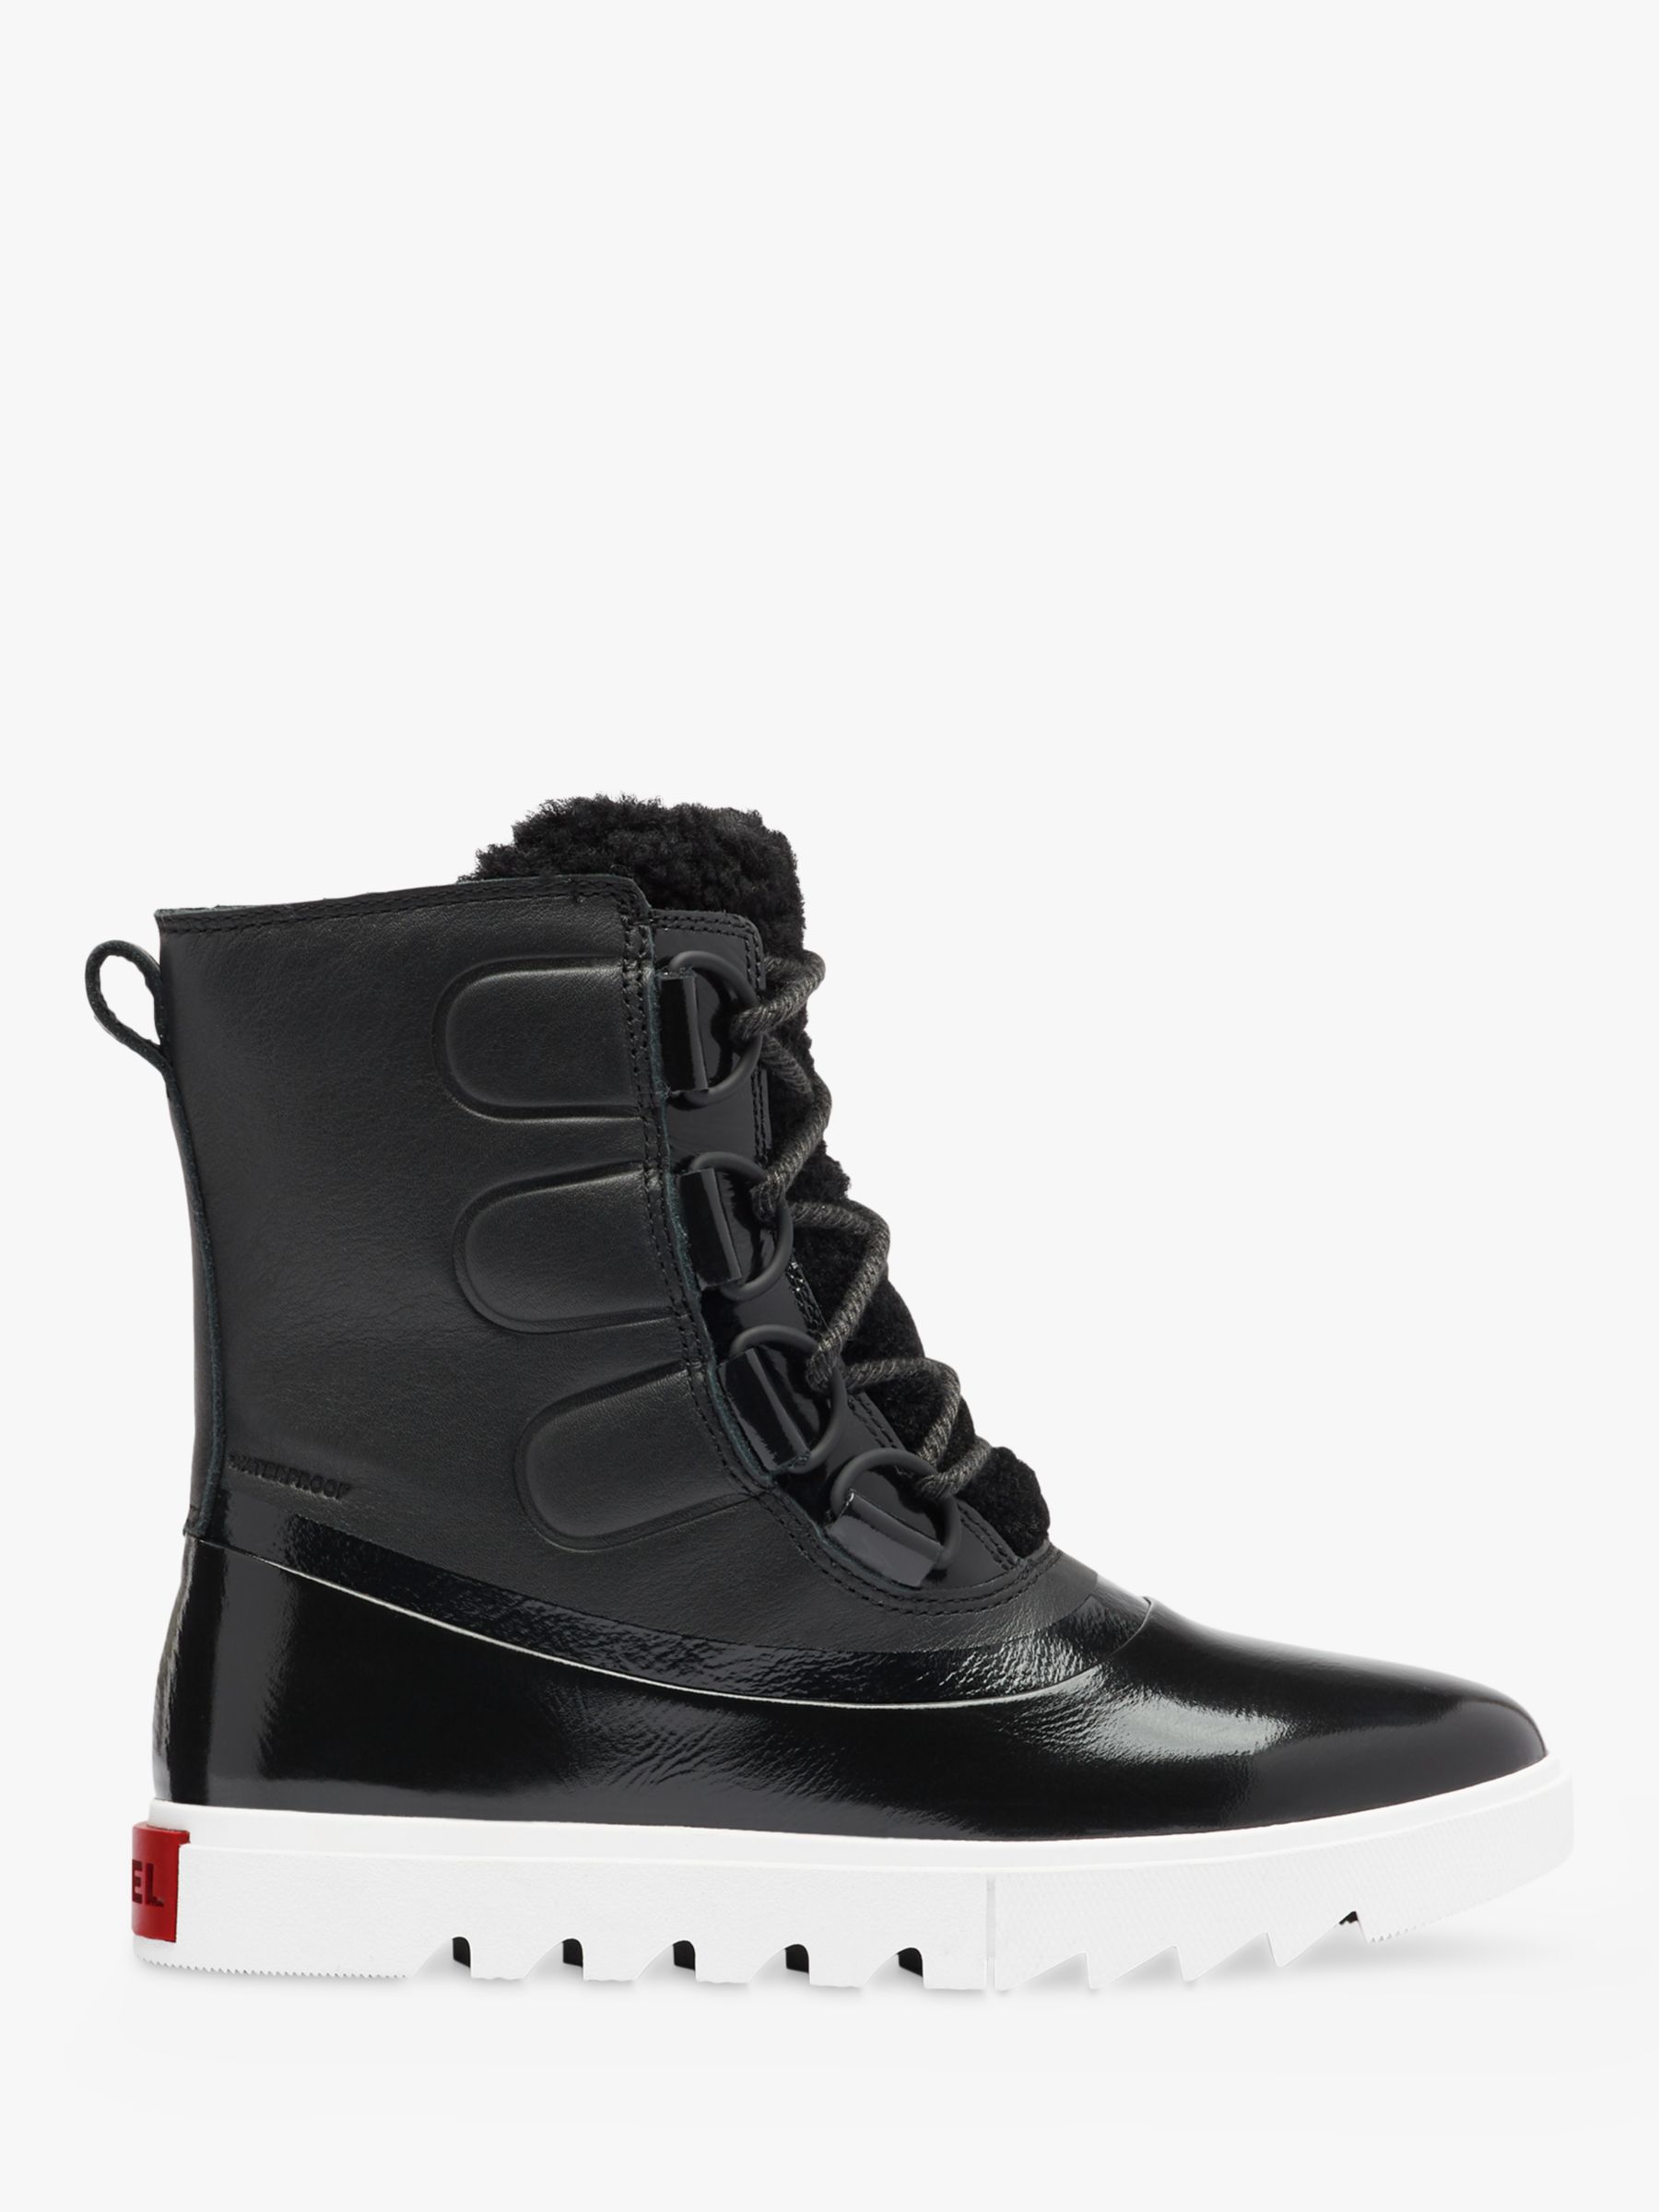 SOREL Joan Of Arctic Leather Snow Boots, Black, 4